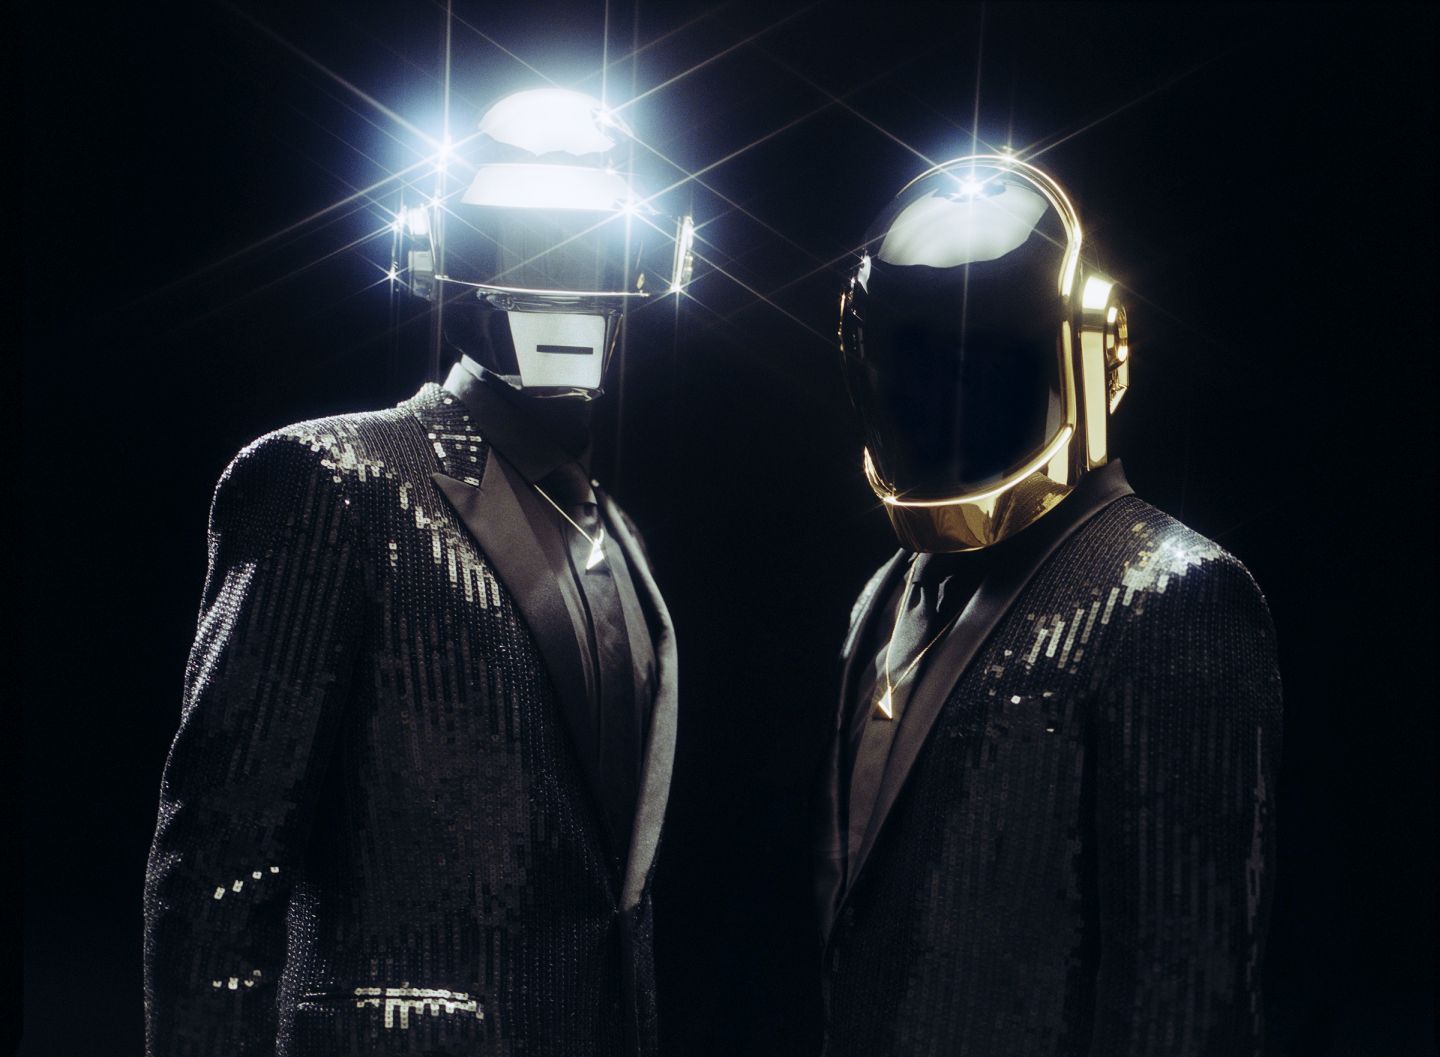 Daft Punk nuovo album e tour - immagini